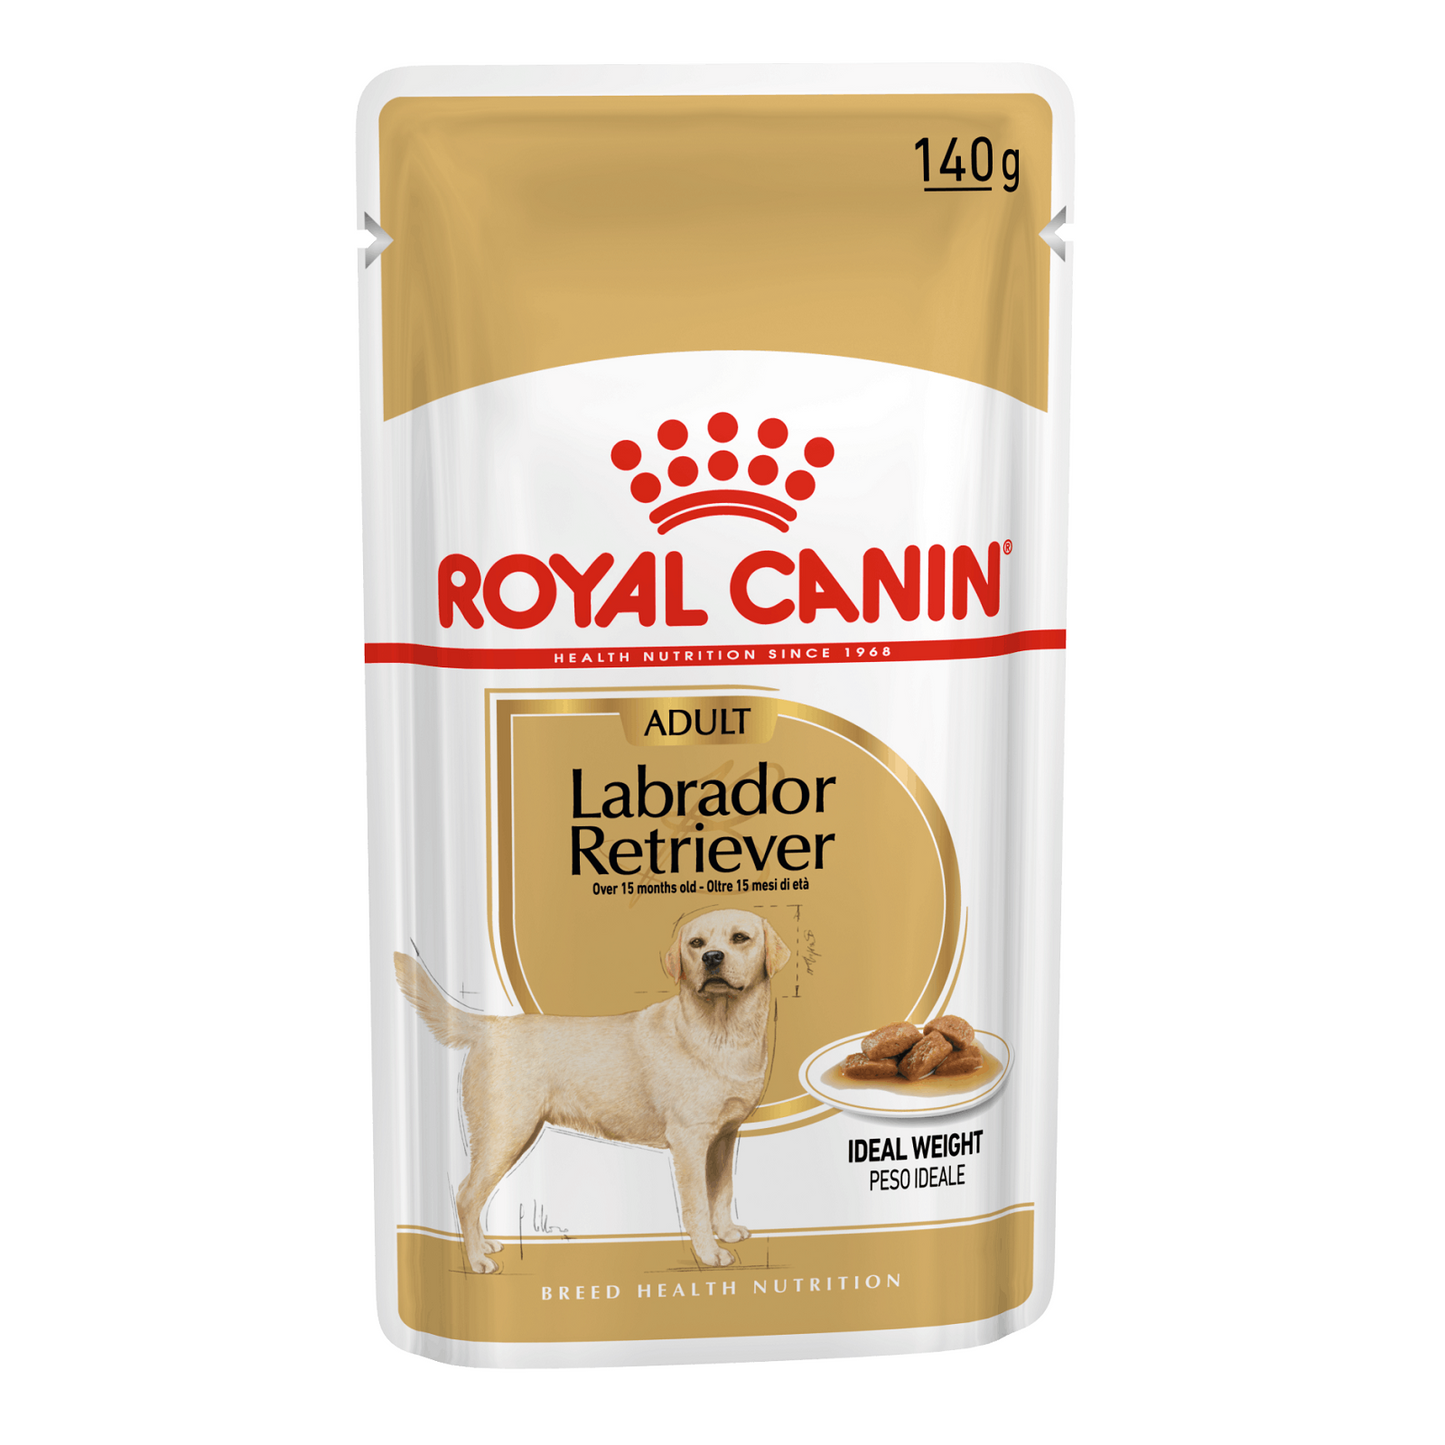 ROYAL CANIN - Labrador Retriever Adult Pouches (10 x 140g)